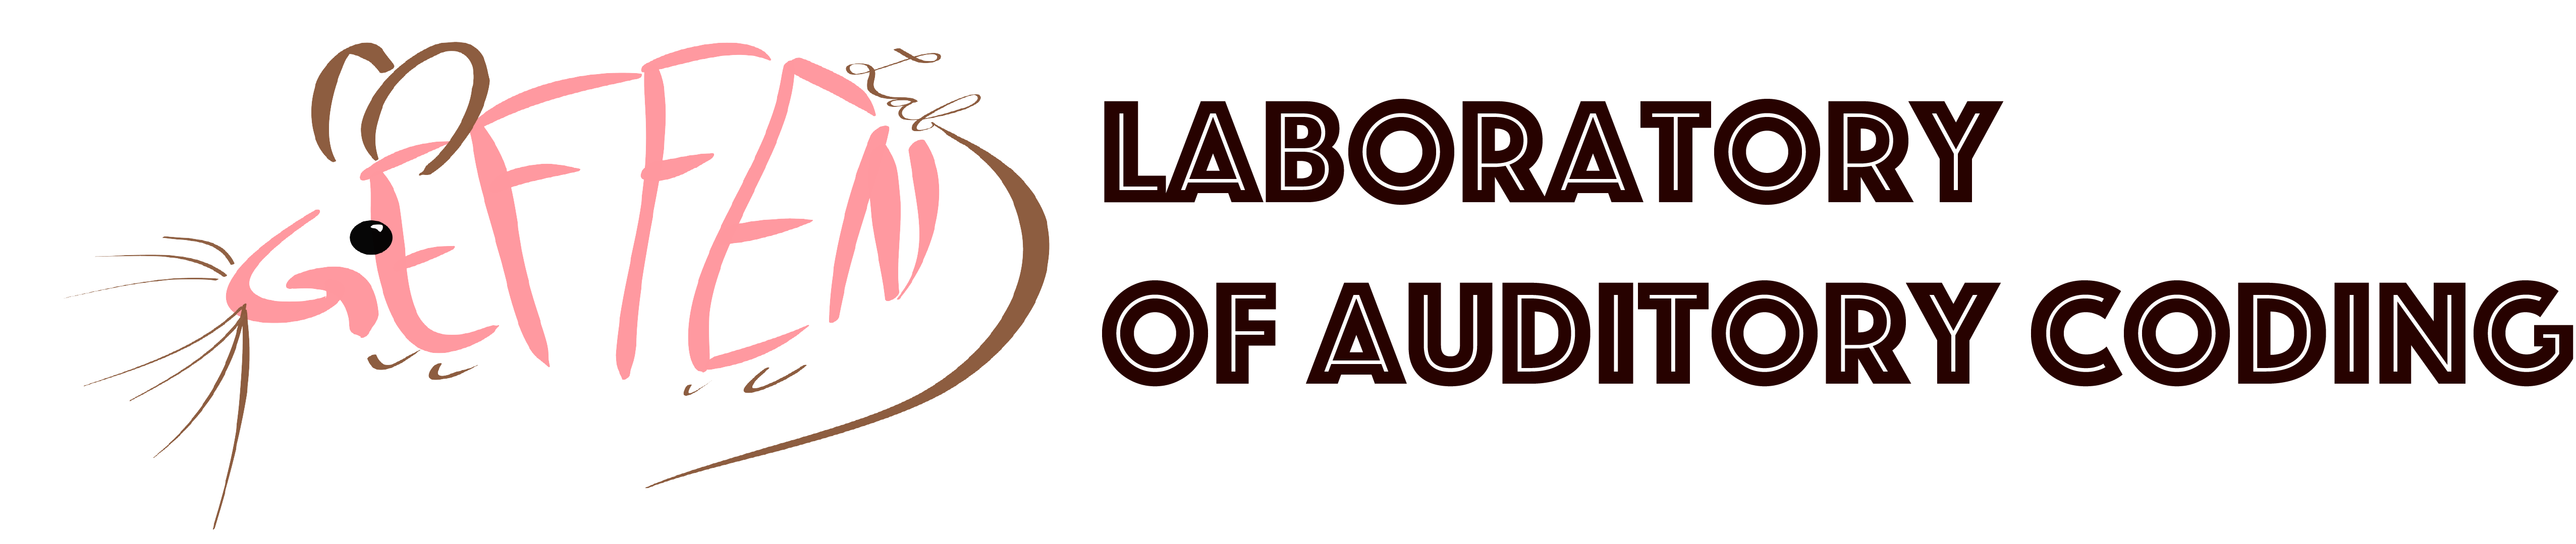 Geffen Laboratory of Auditory Coding